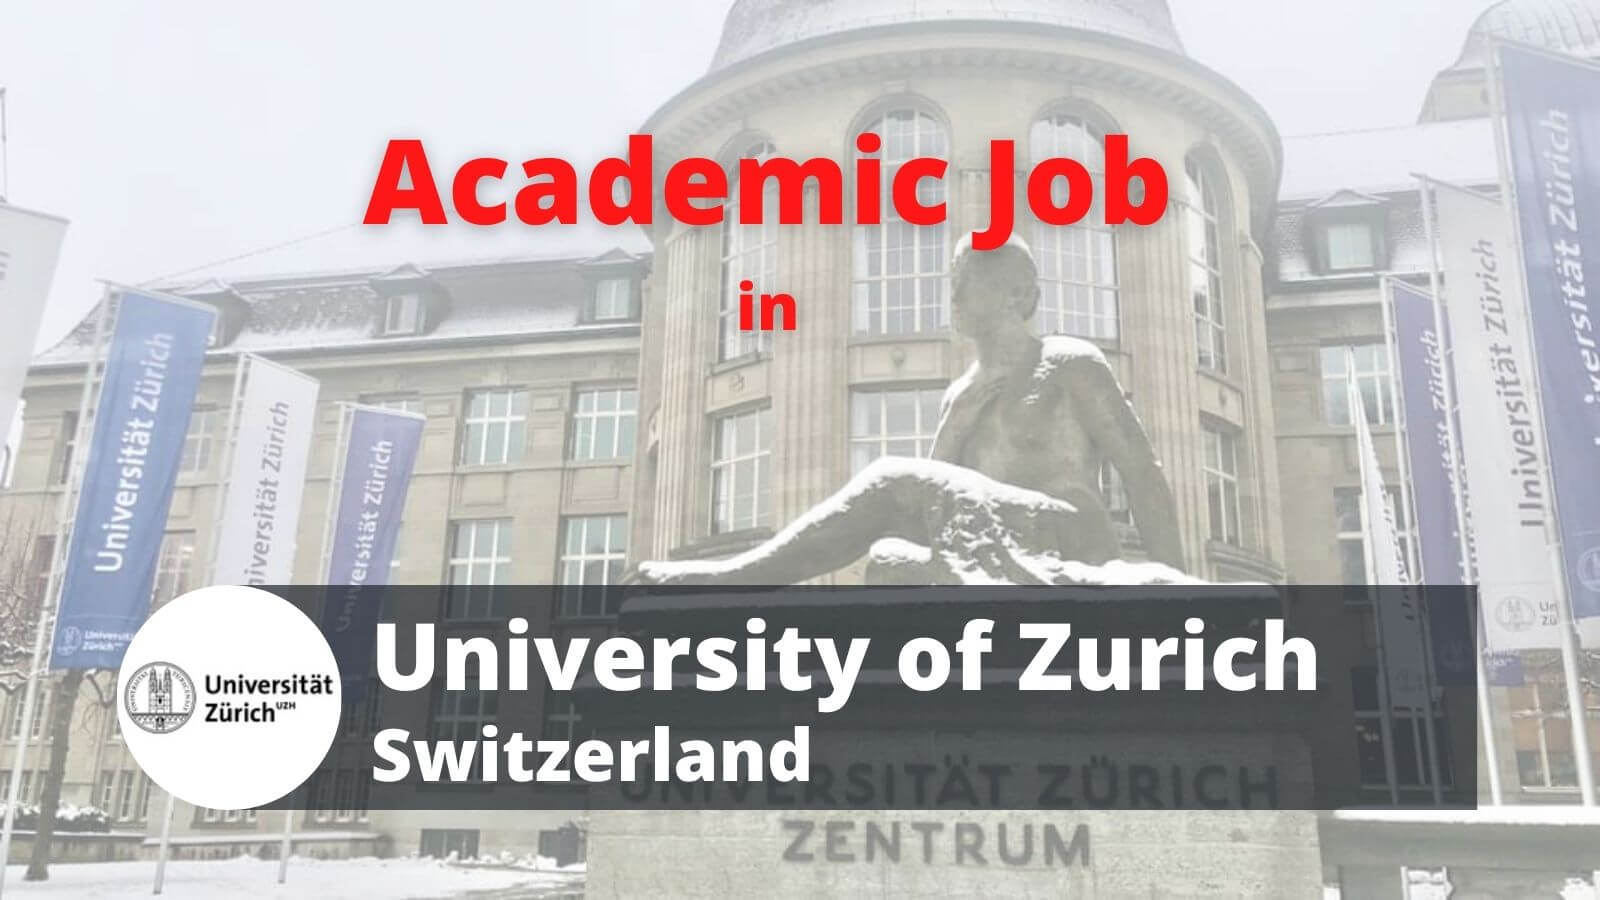 Academic job in University of Zurich UZH Switzerland